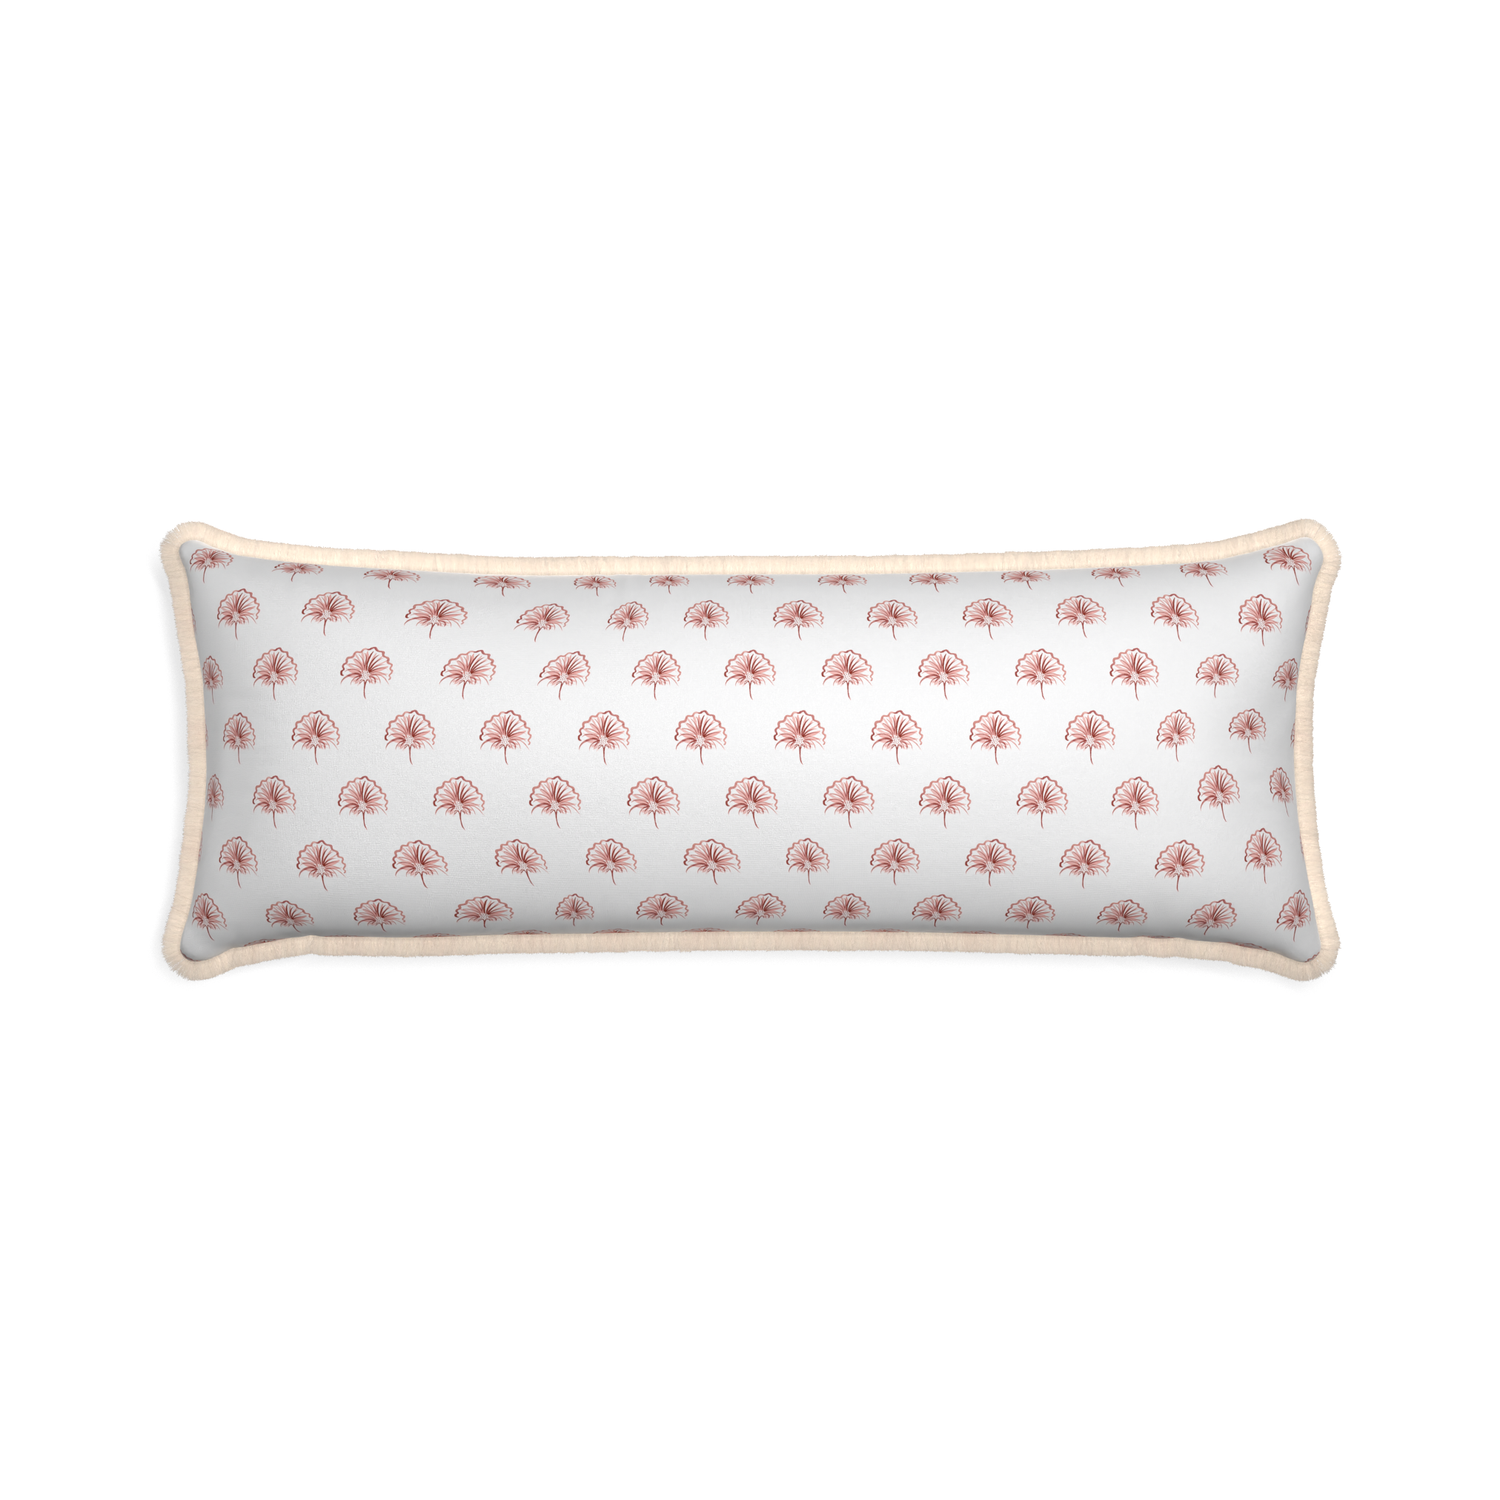 Xl-lumbar penelope rose custom pillow with cream fringe on white background